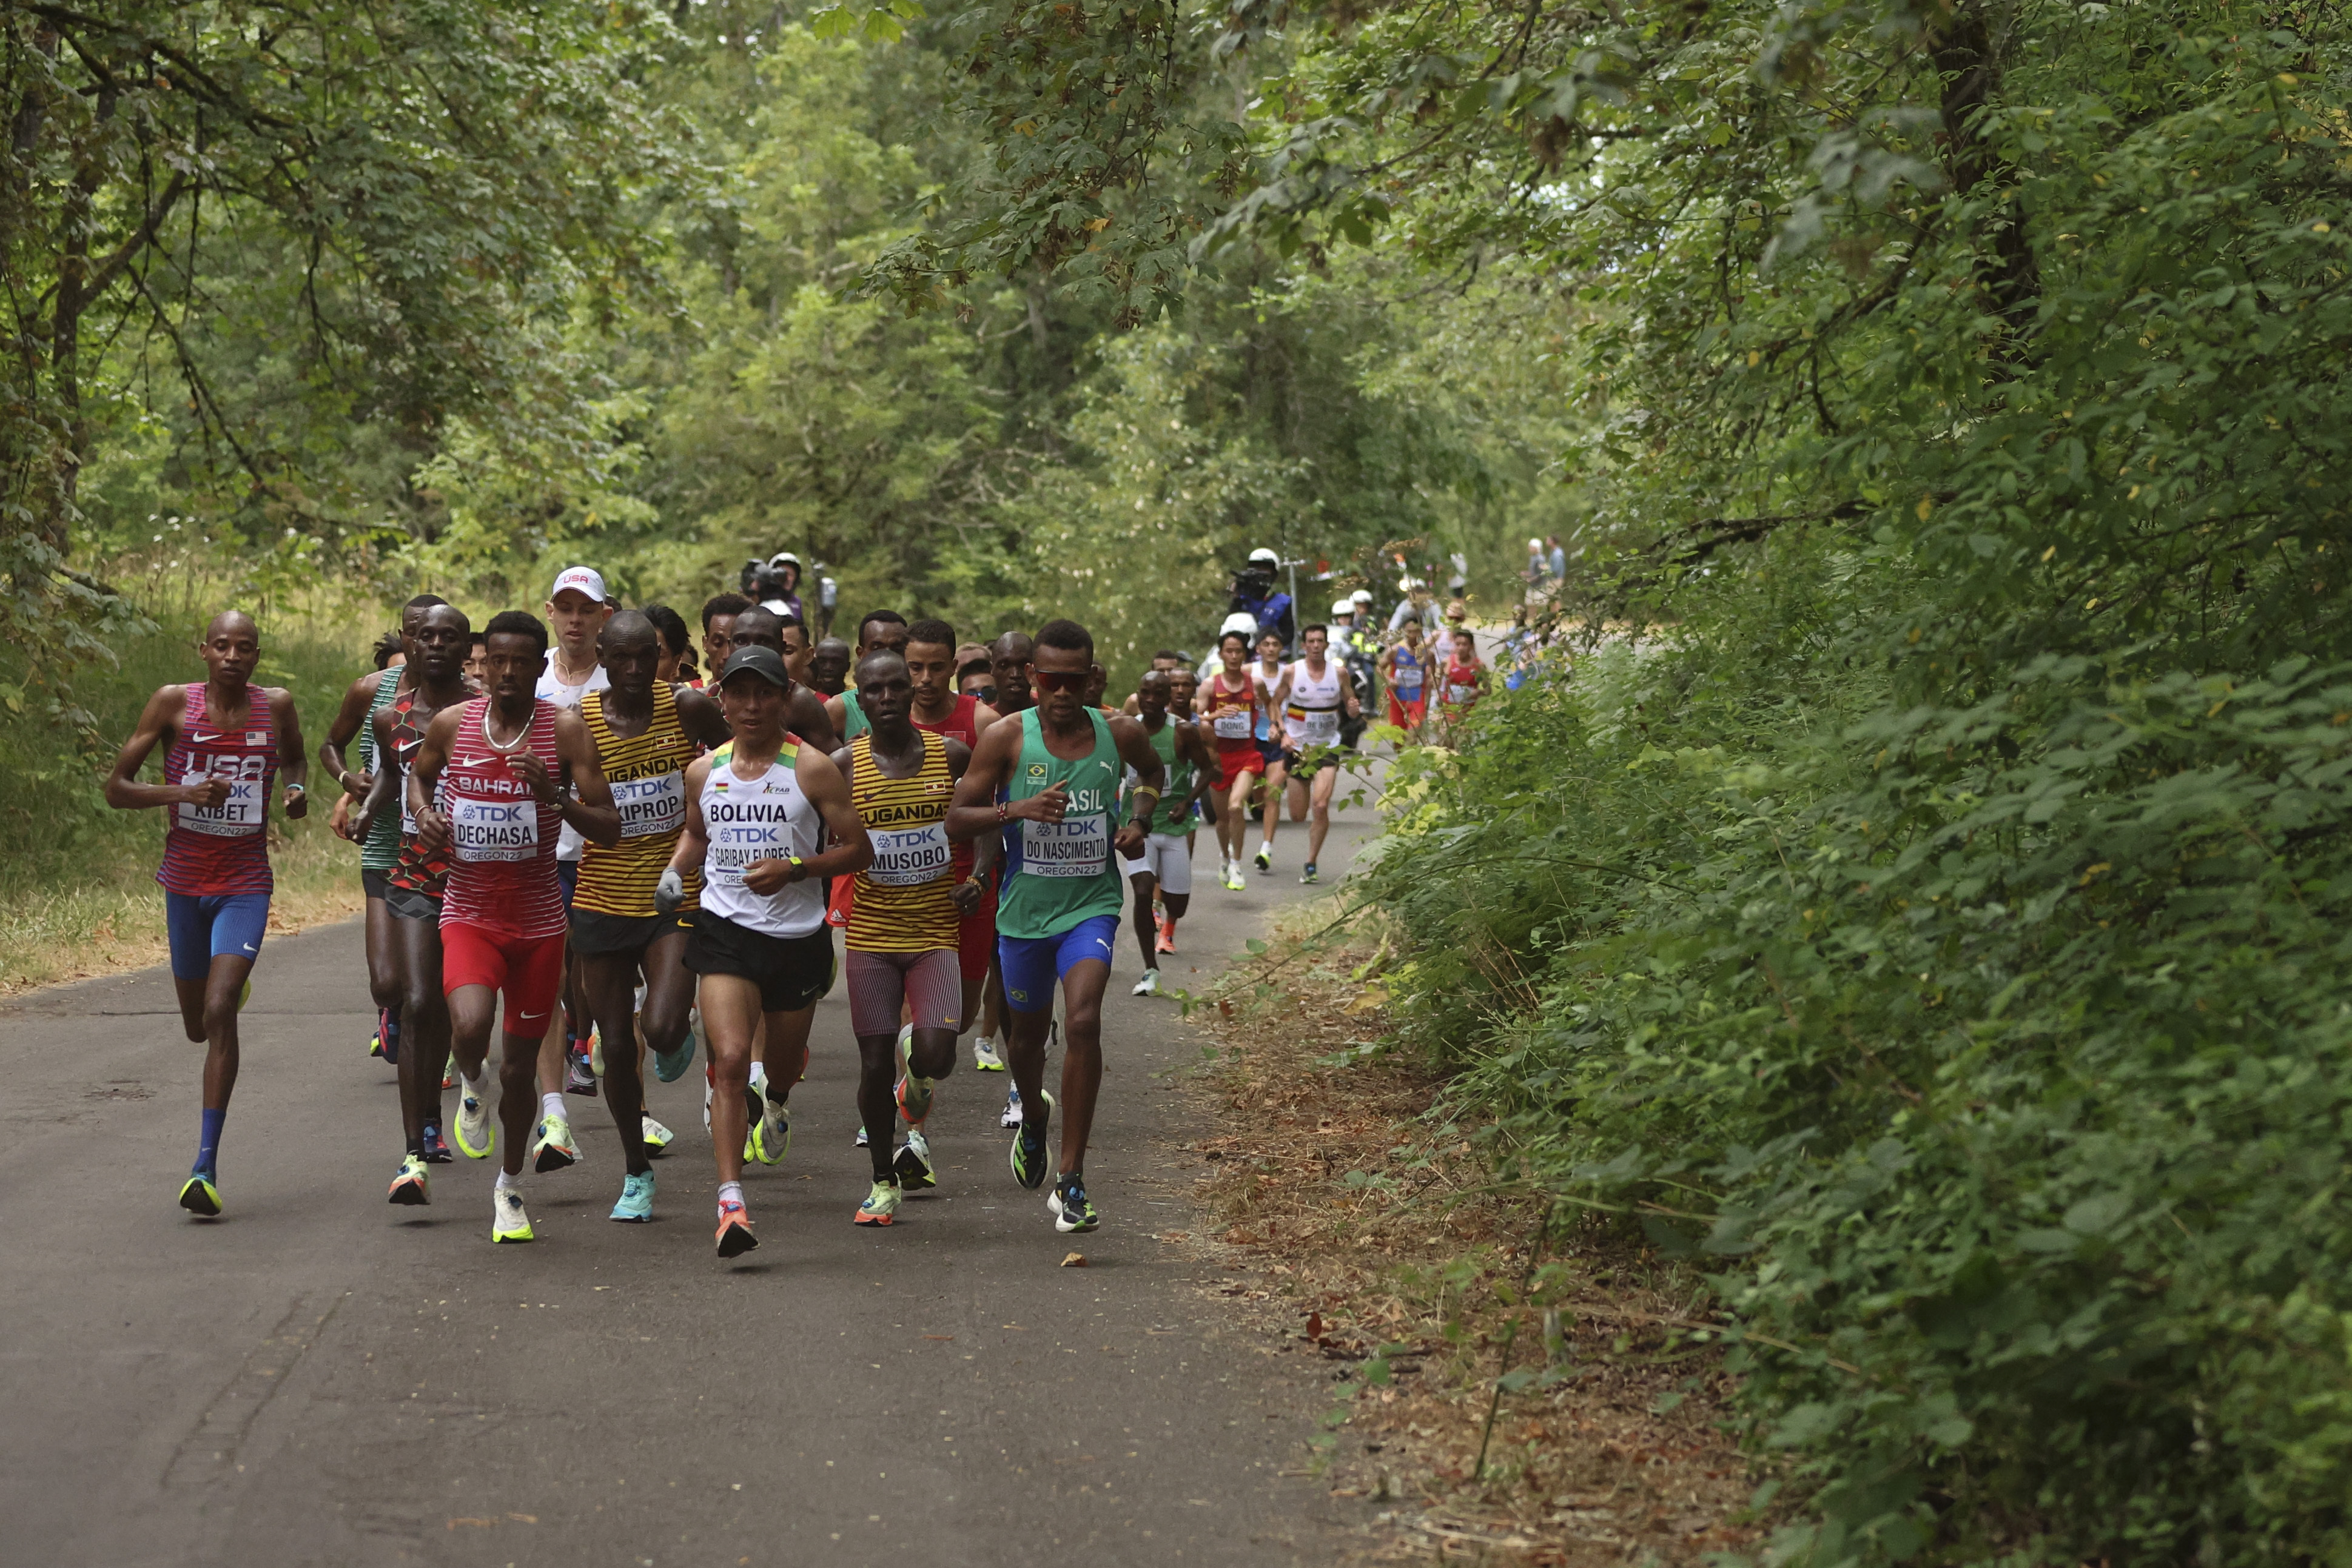 Tamirat Tola Leads Ethiopian 1-2, as Cam Levins Smashes Canadian Record at World  Championships Marathon 